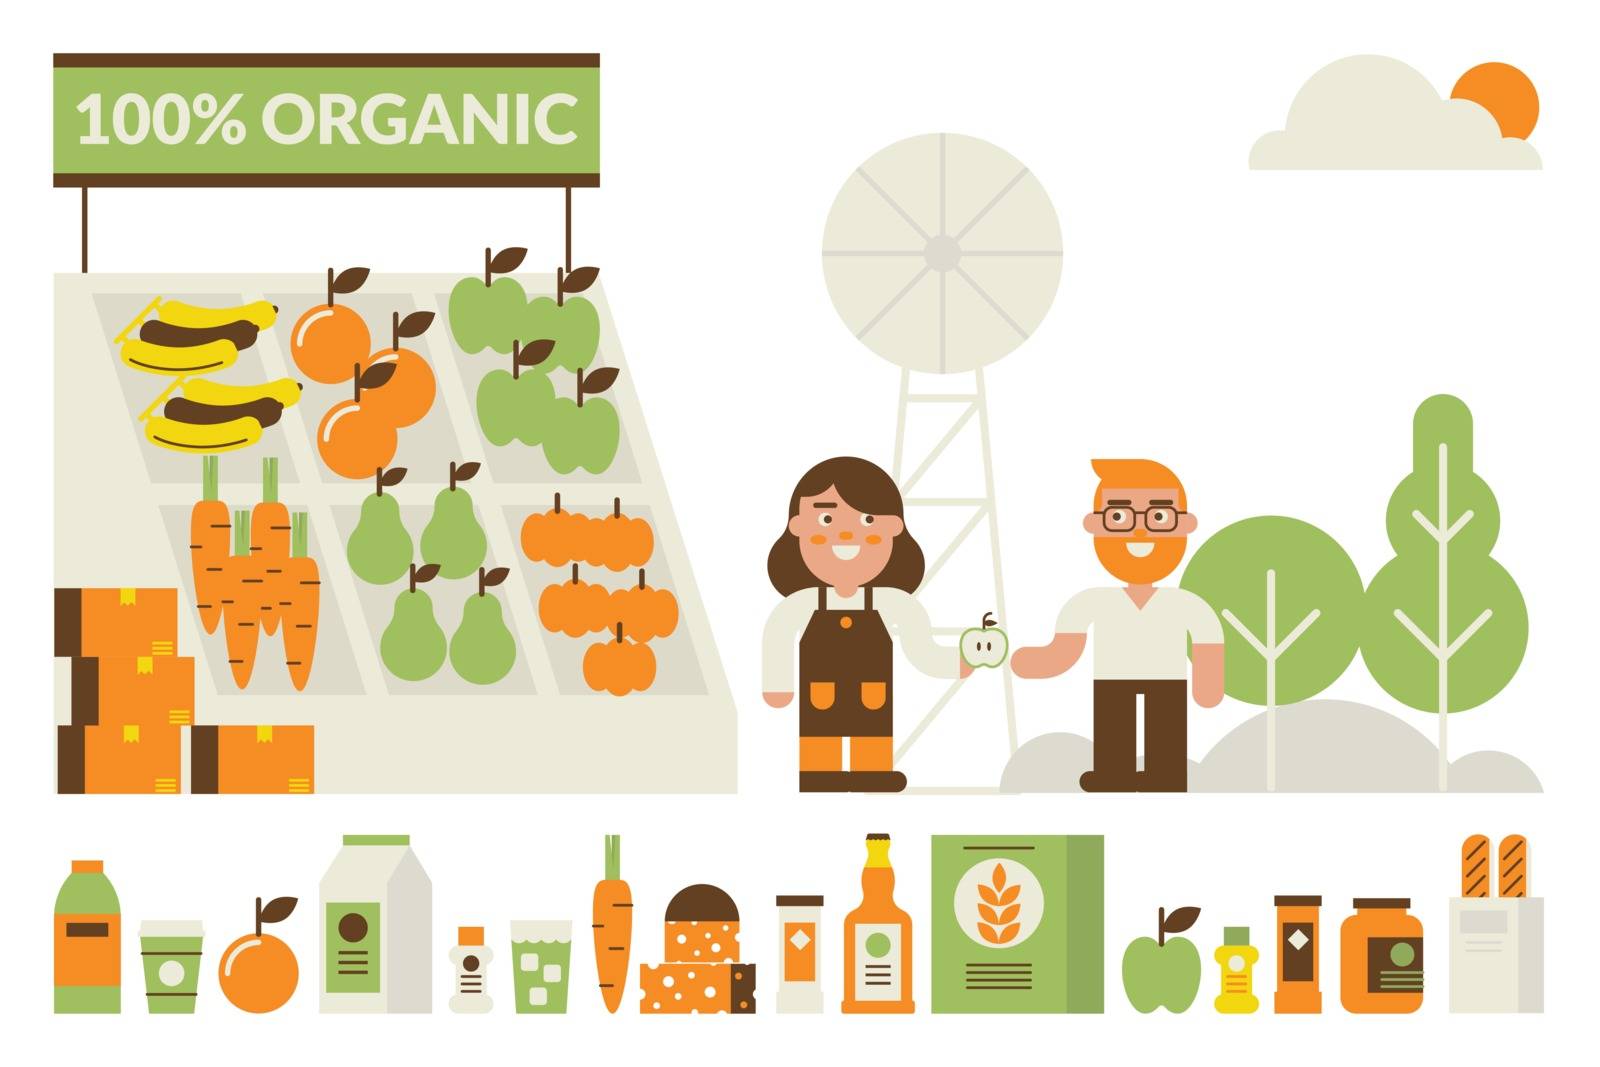 Organic market concept by nongpimmy